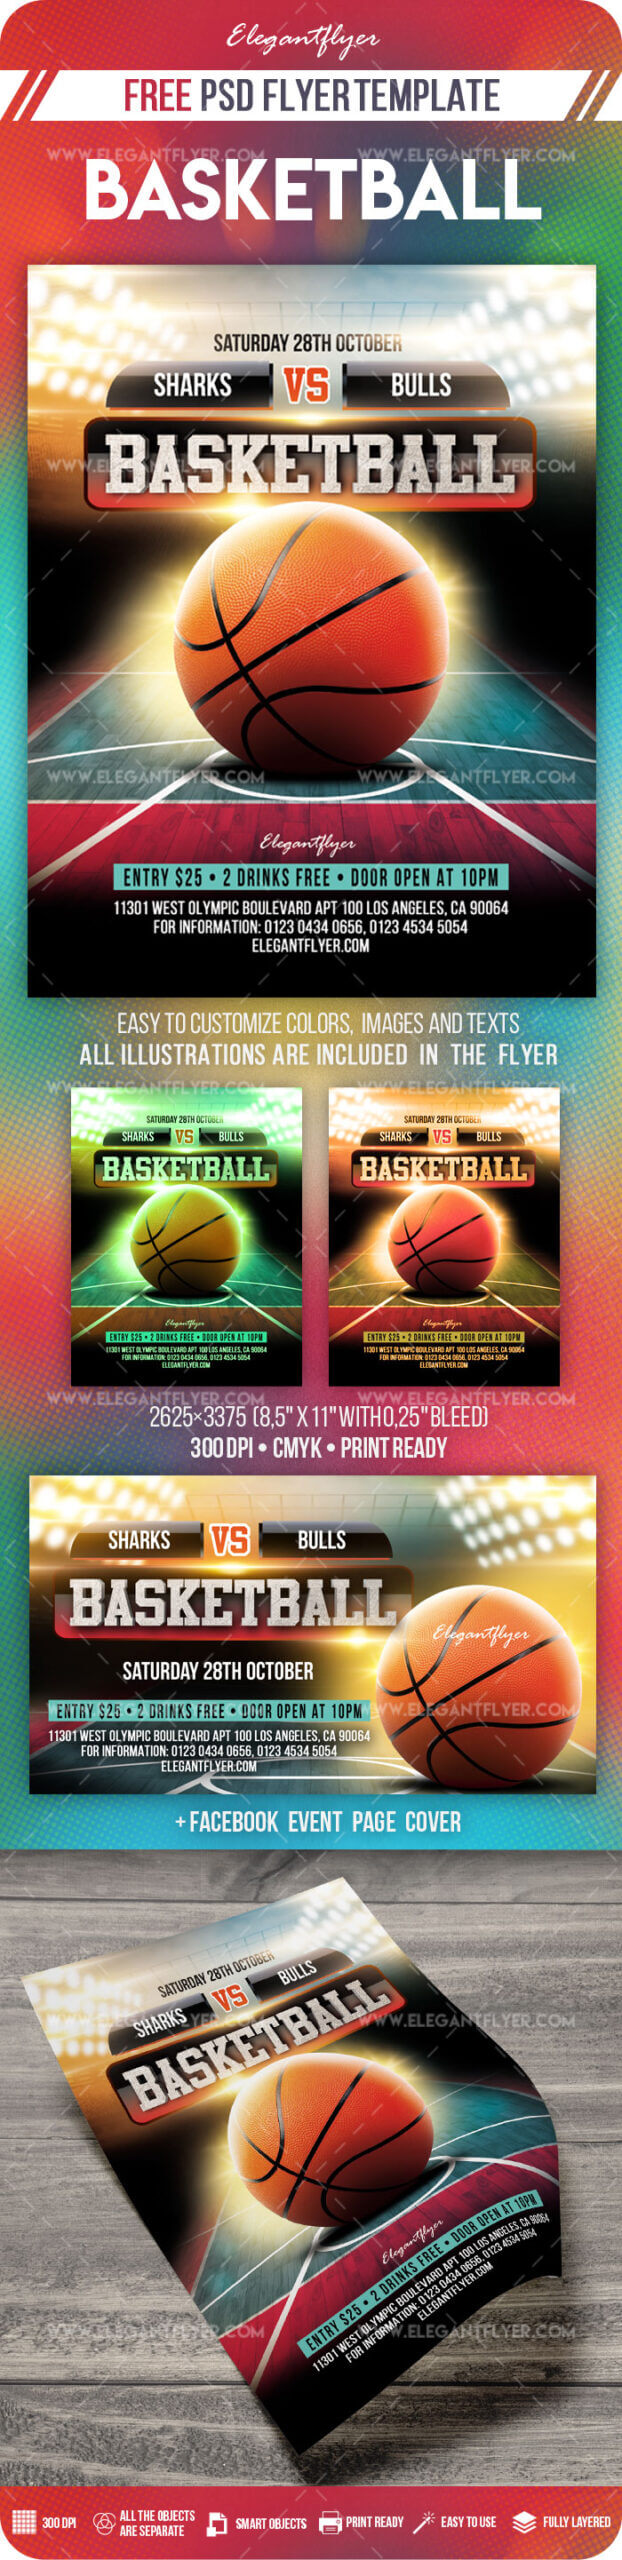 015 Basketball Camp Brochure Template Free Bigpreview Flyer Inside Basketball Camp Brochure Template